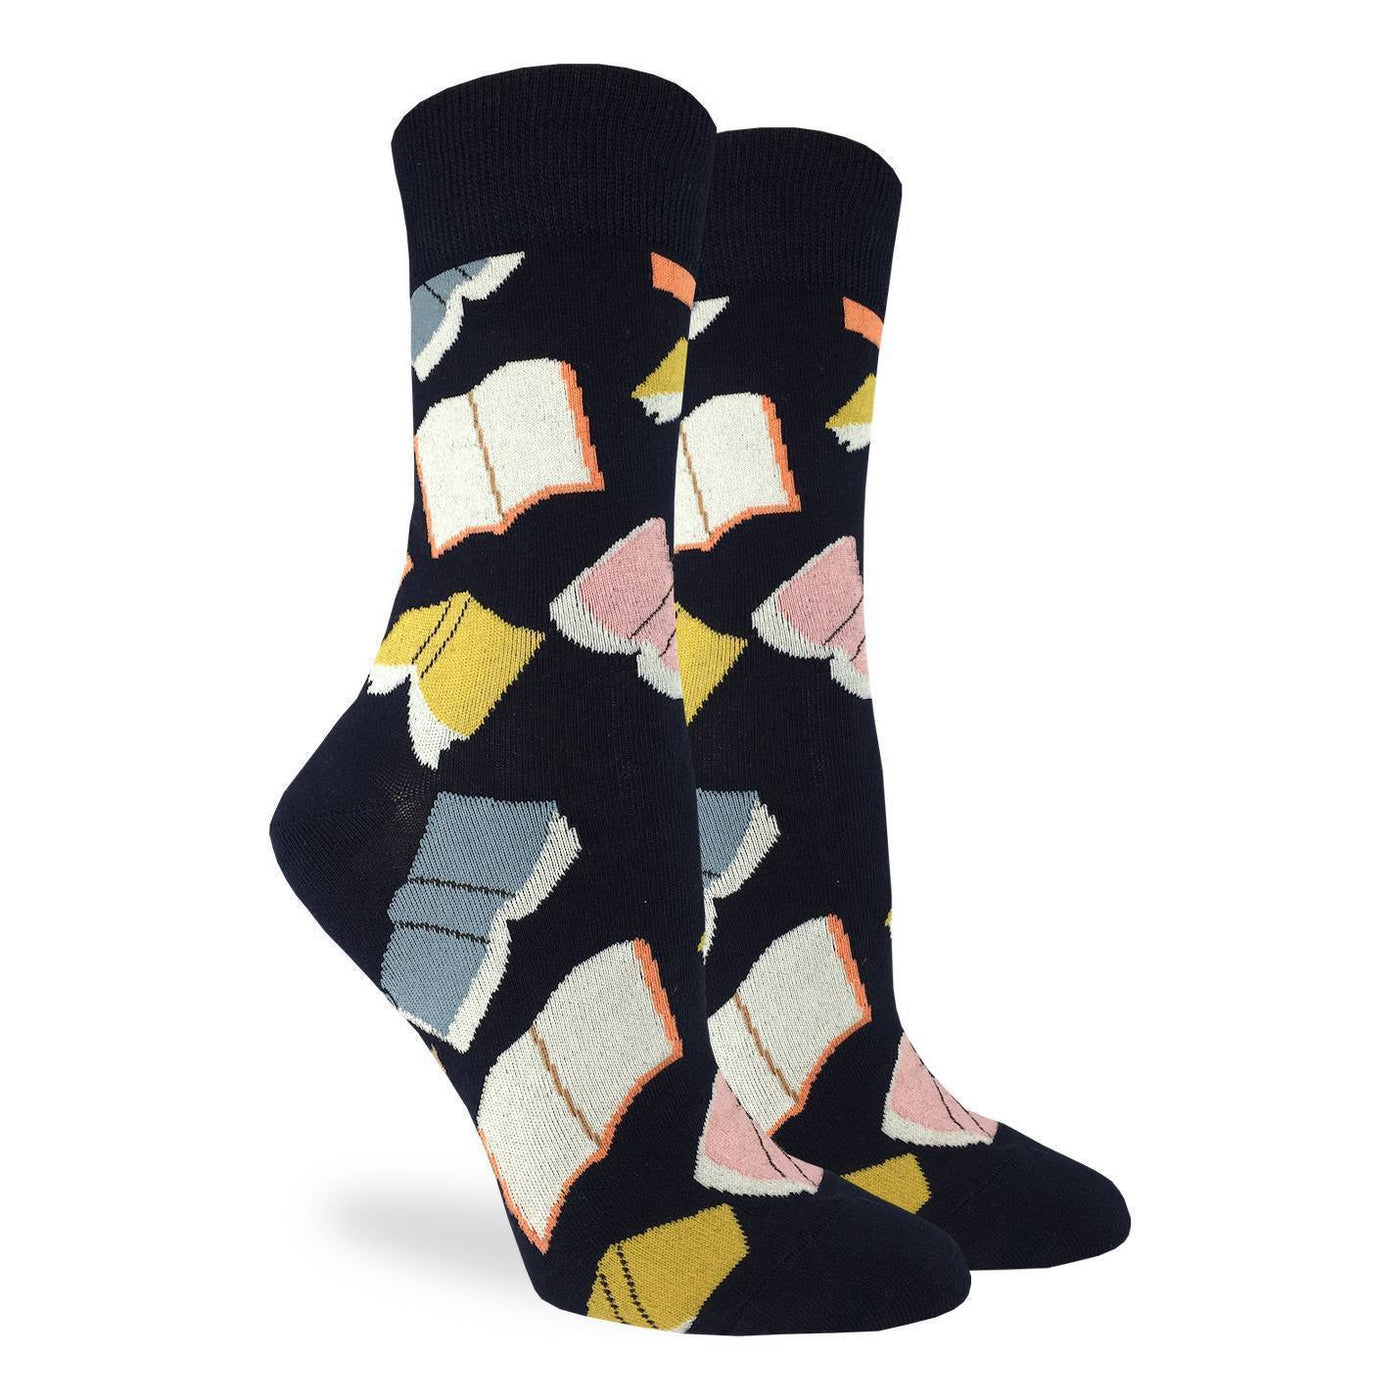 books socks